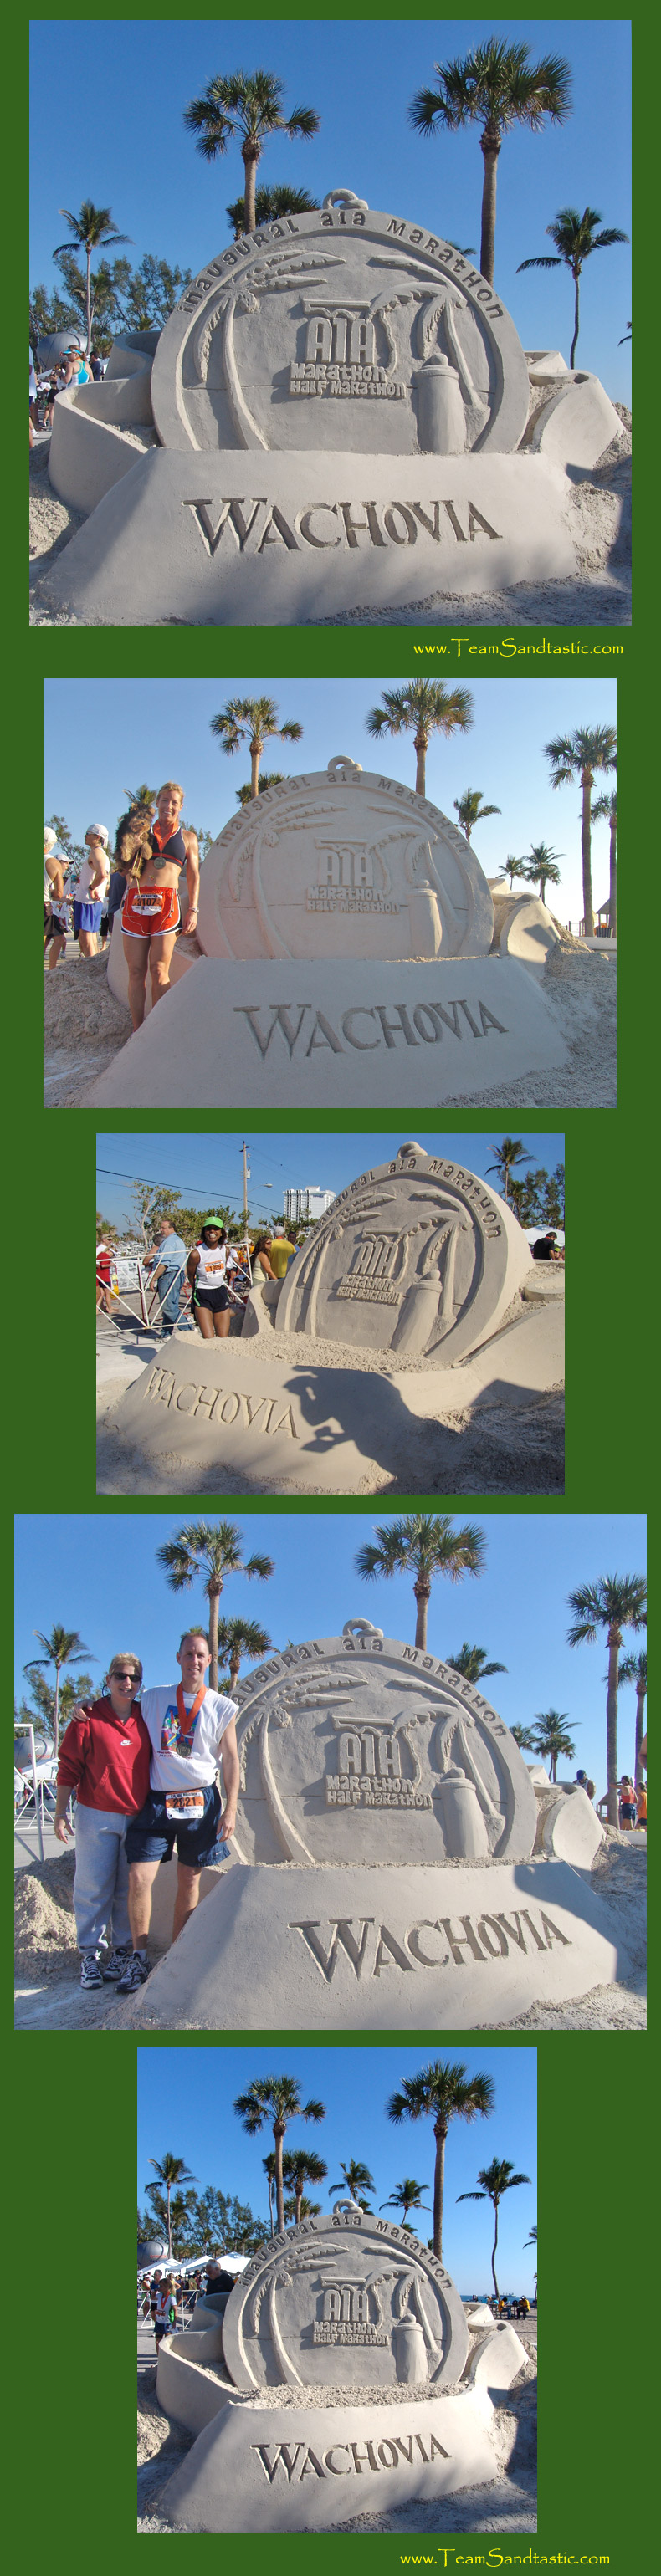 Inaugural Marathon Sand Sculpture